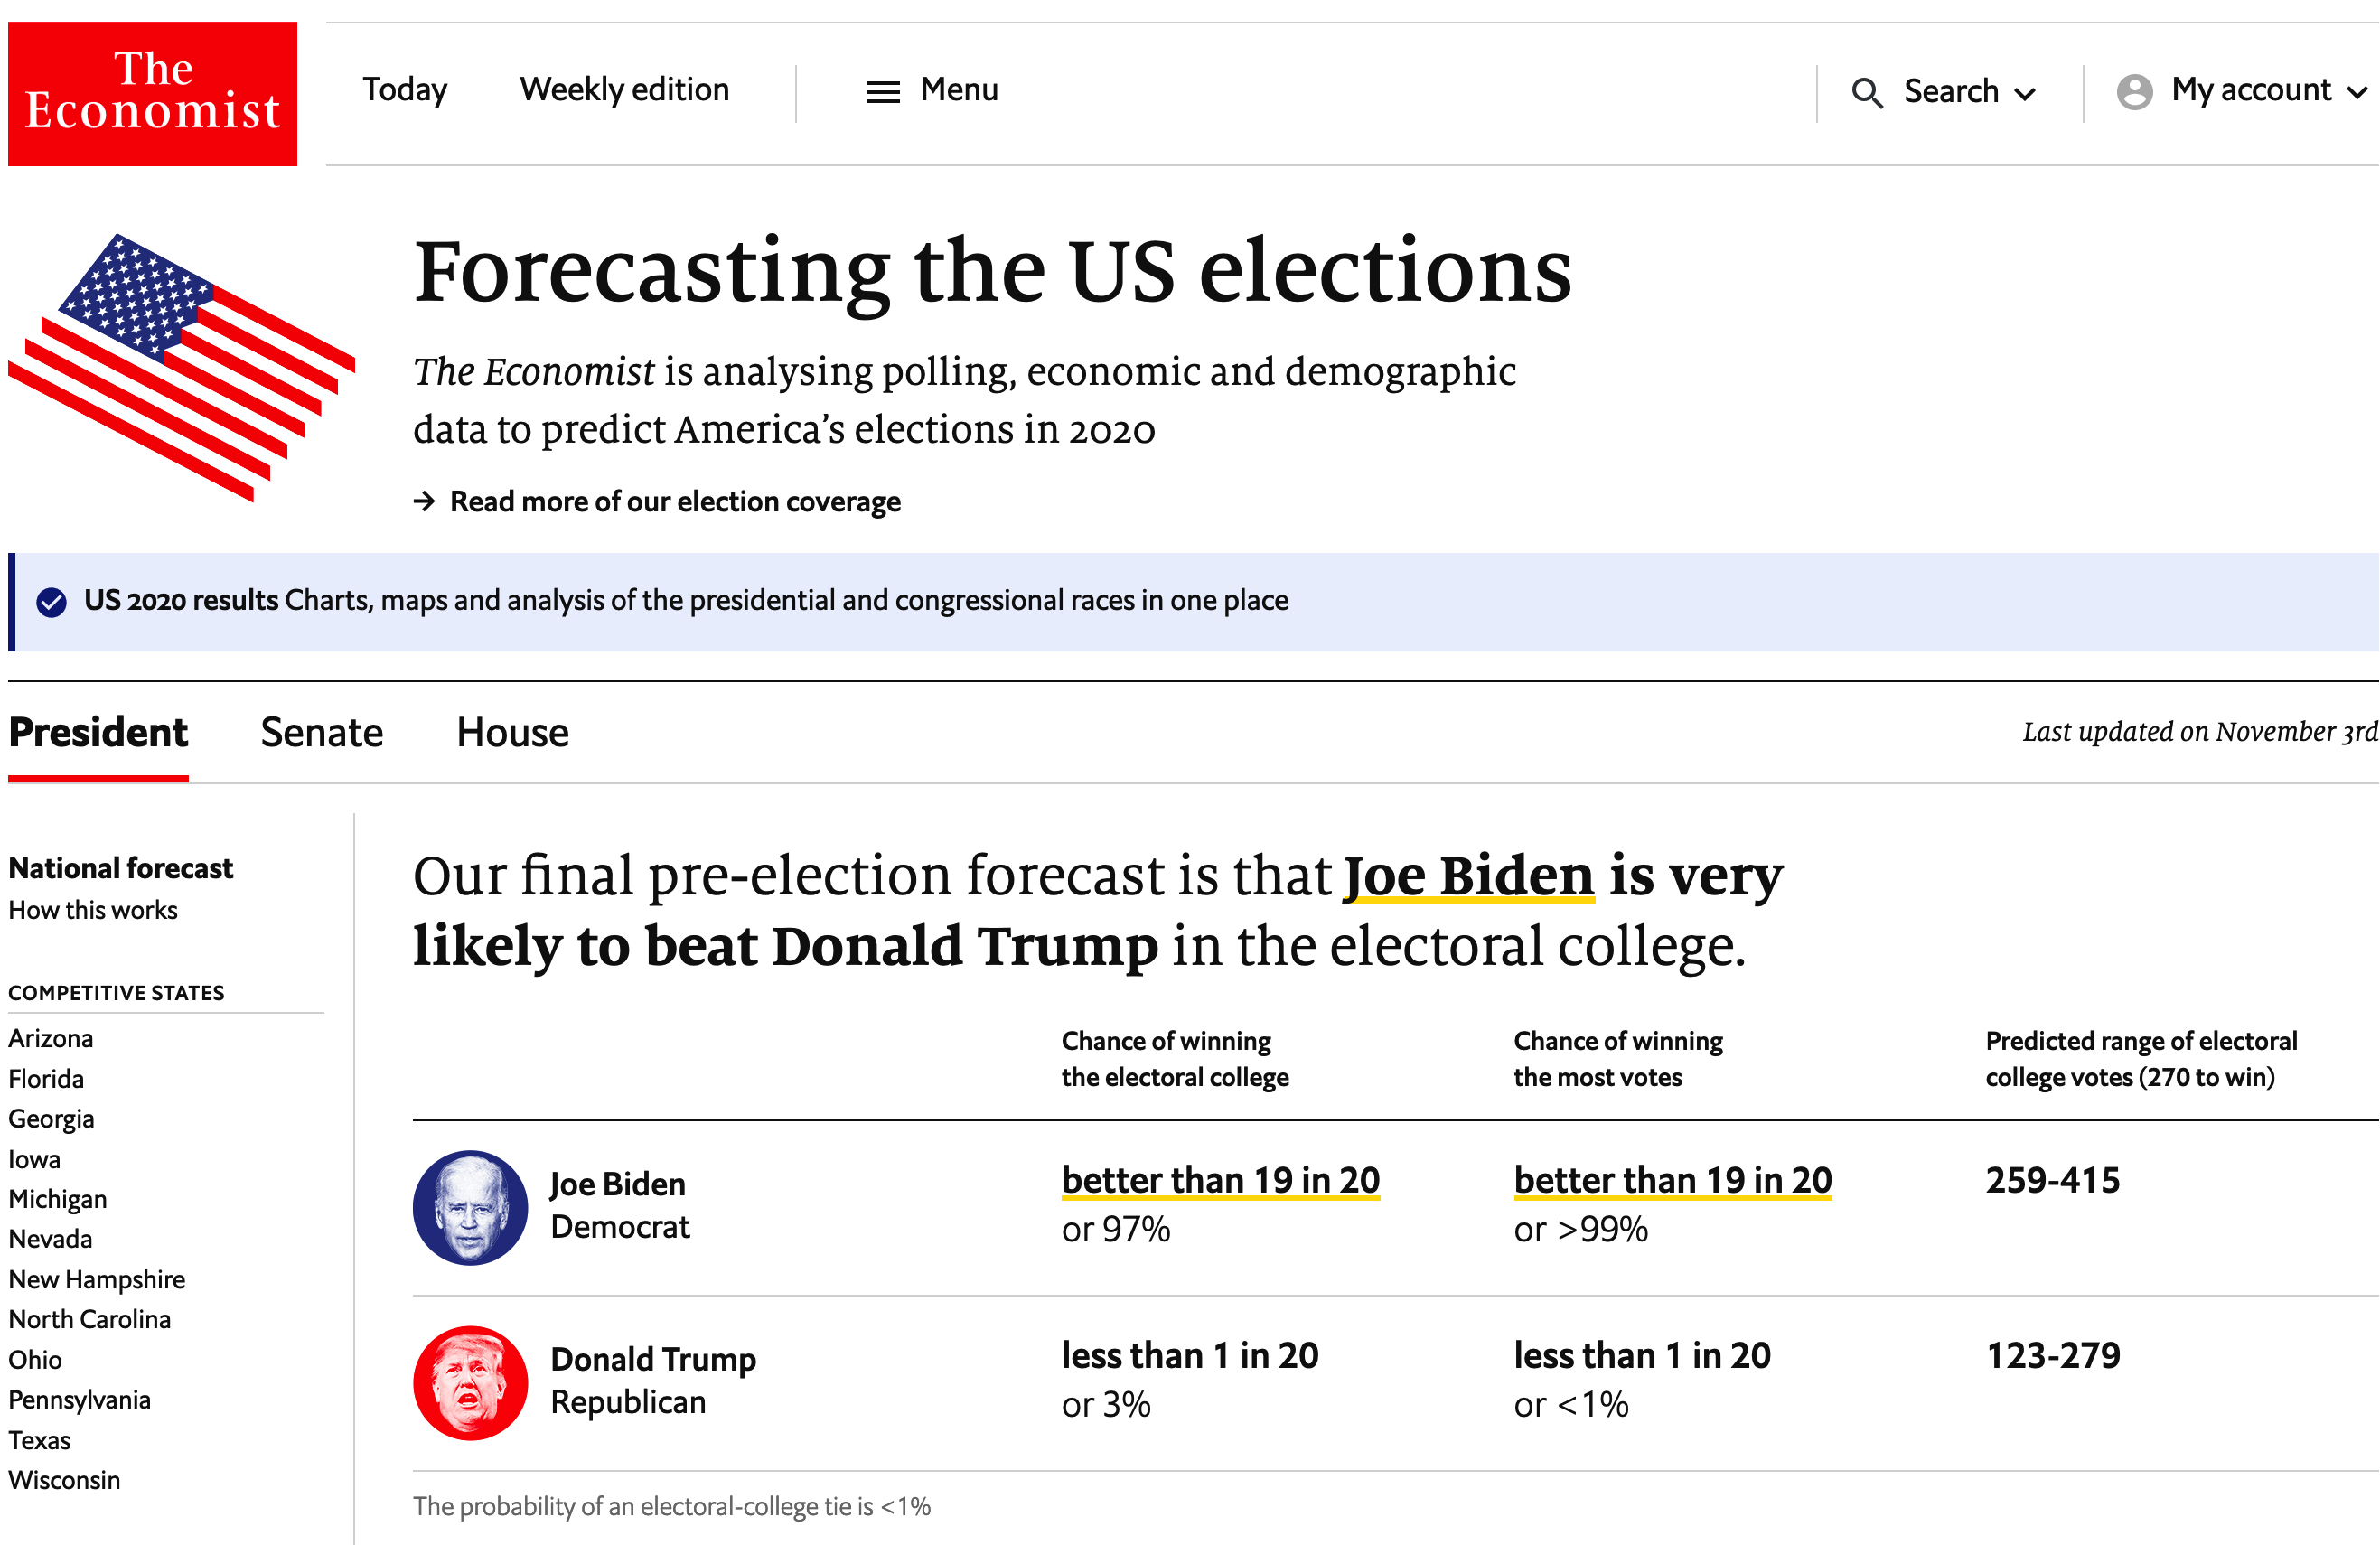  US 2020 Presidential Forecast